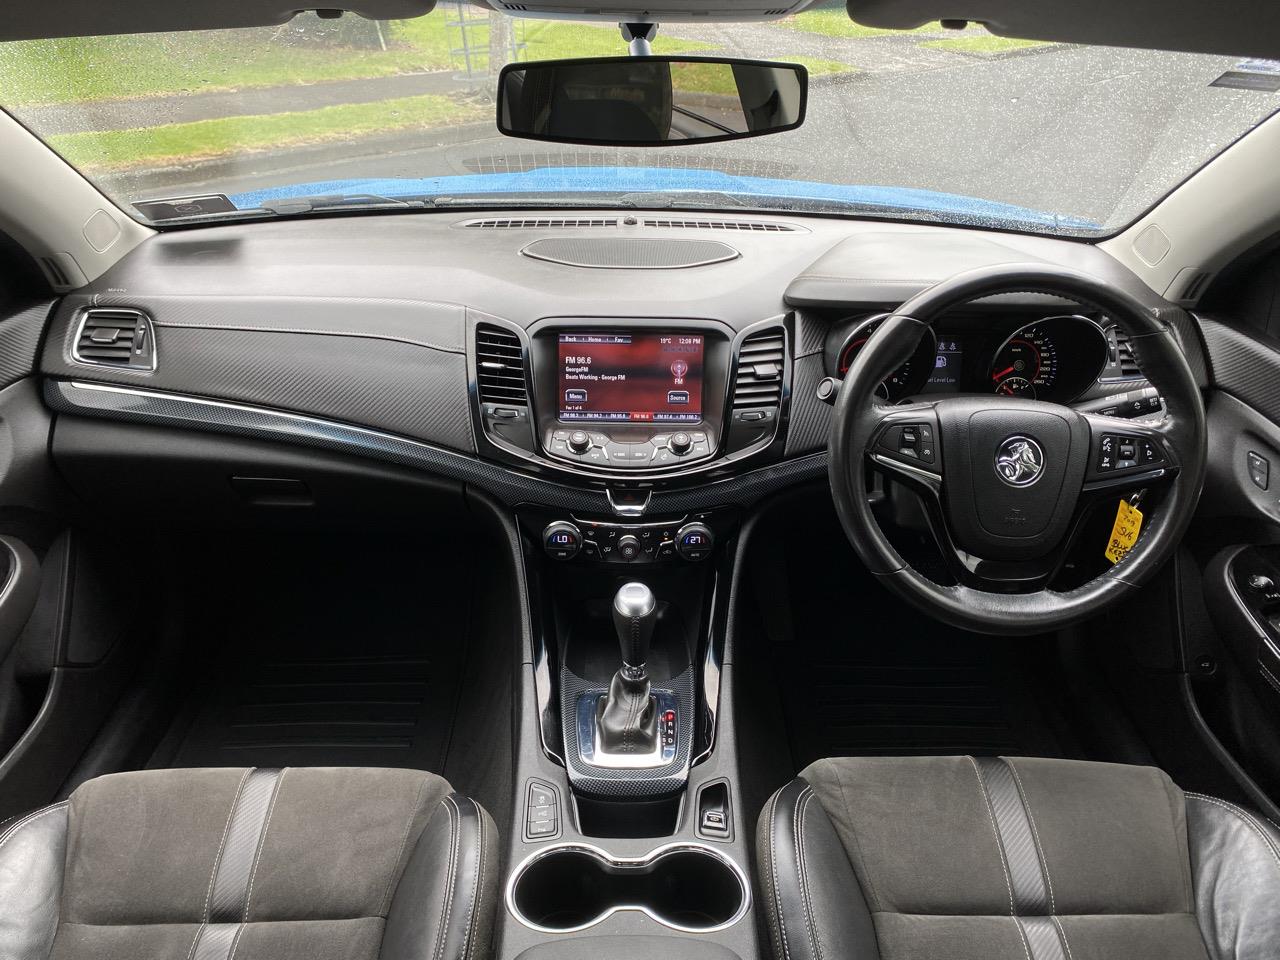 2014 Holden Commodore